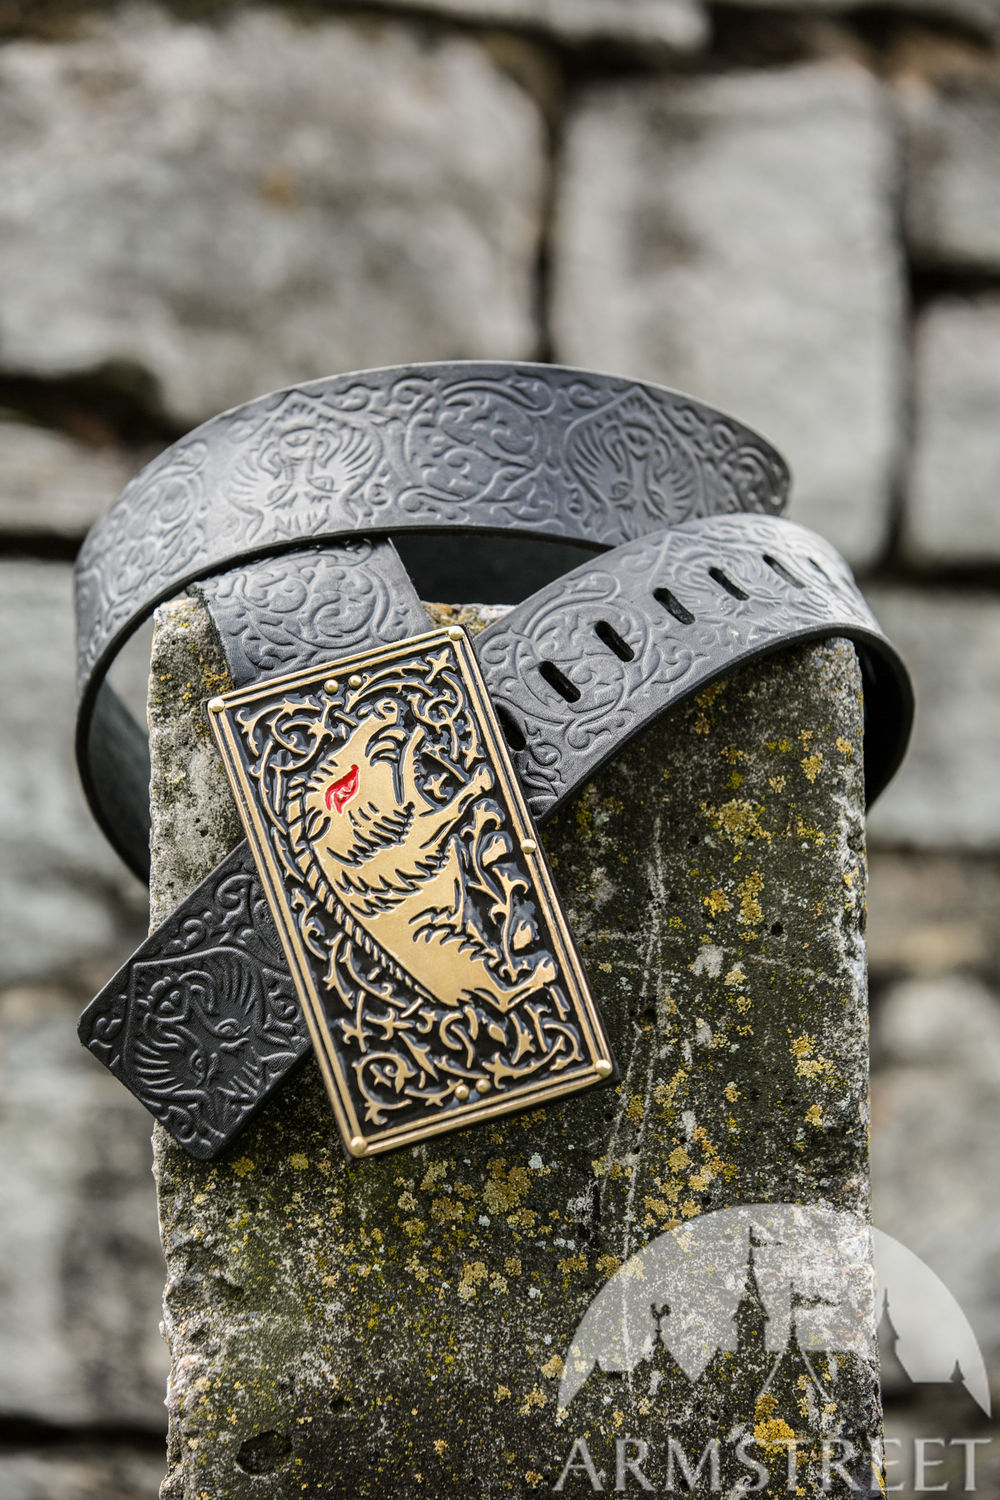 Leather belt with secret pocket “Wayward Knight”